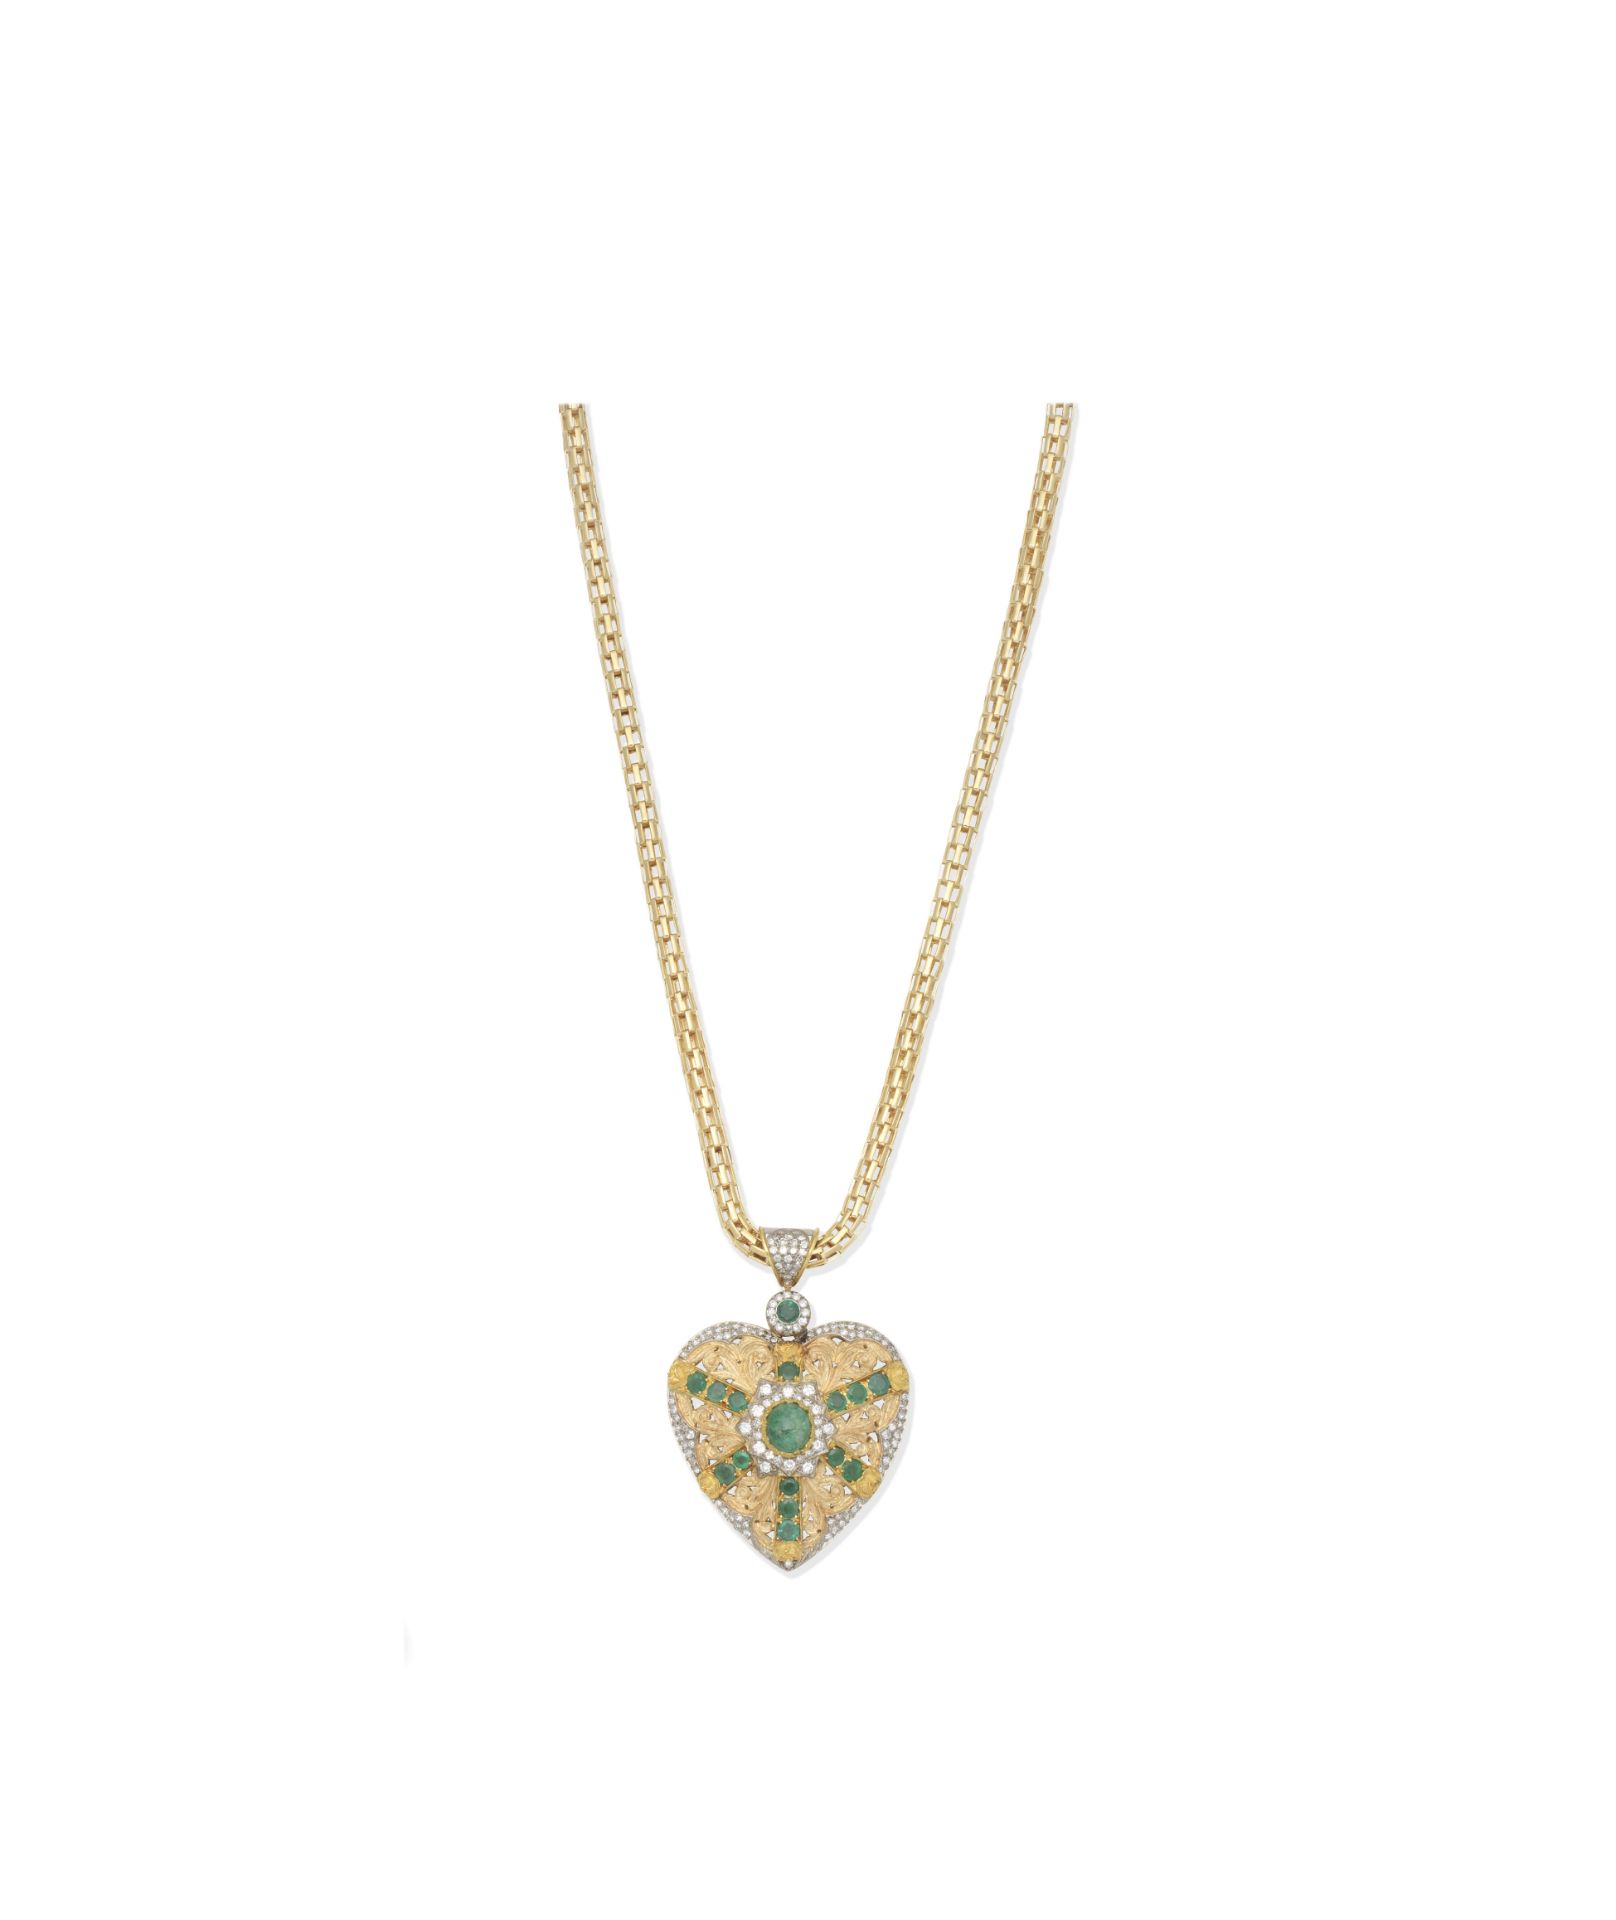 Emerald and diamond pendant and chain